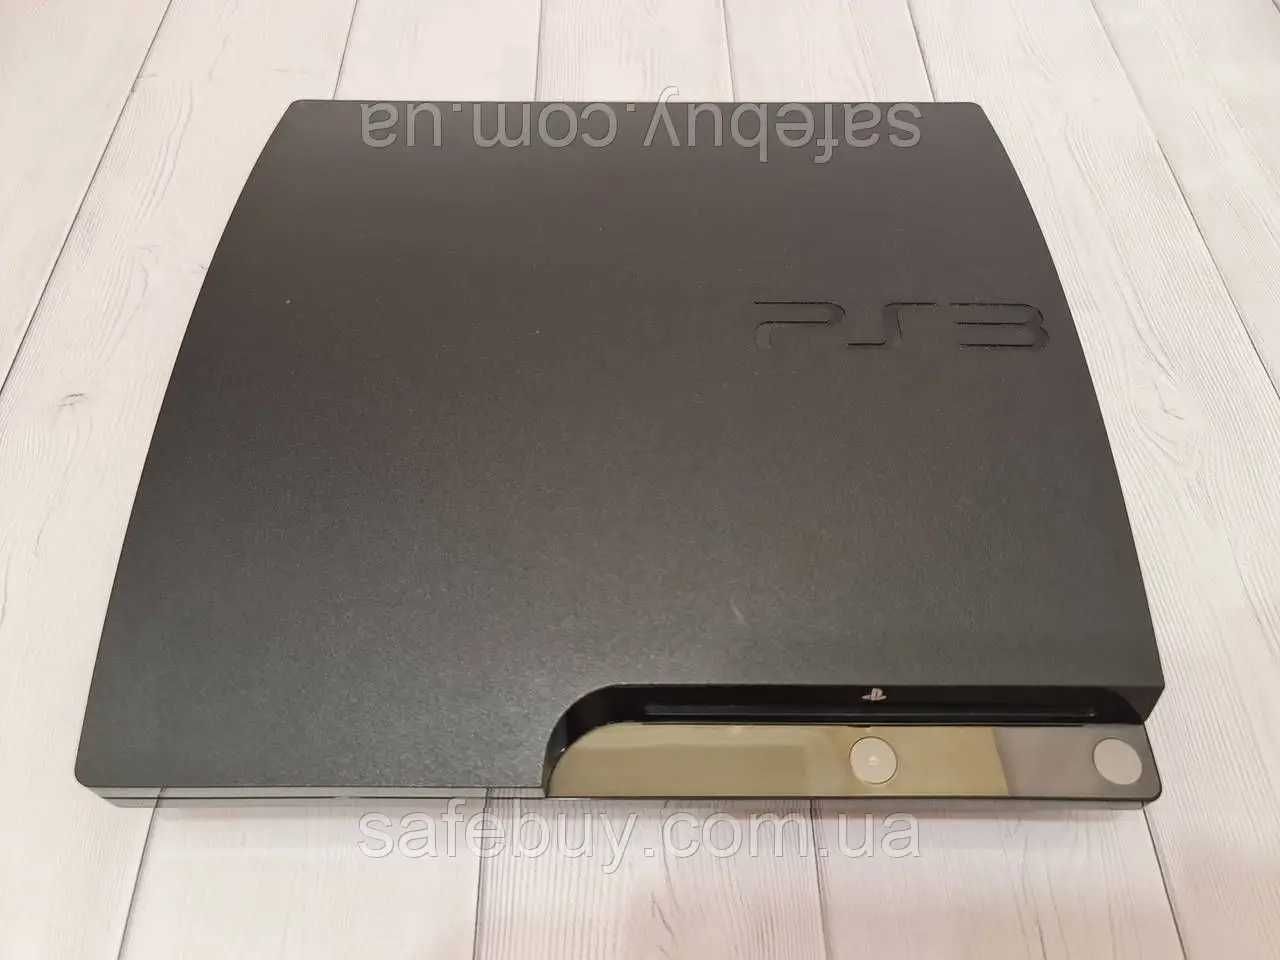 Sony PlayStation 3 Slim 320 Gb PS3 с гарантией и играми